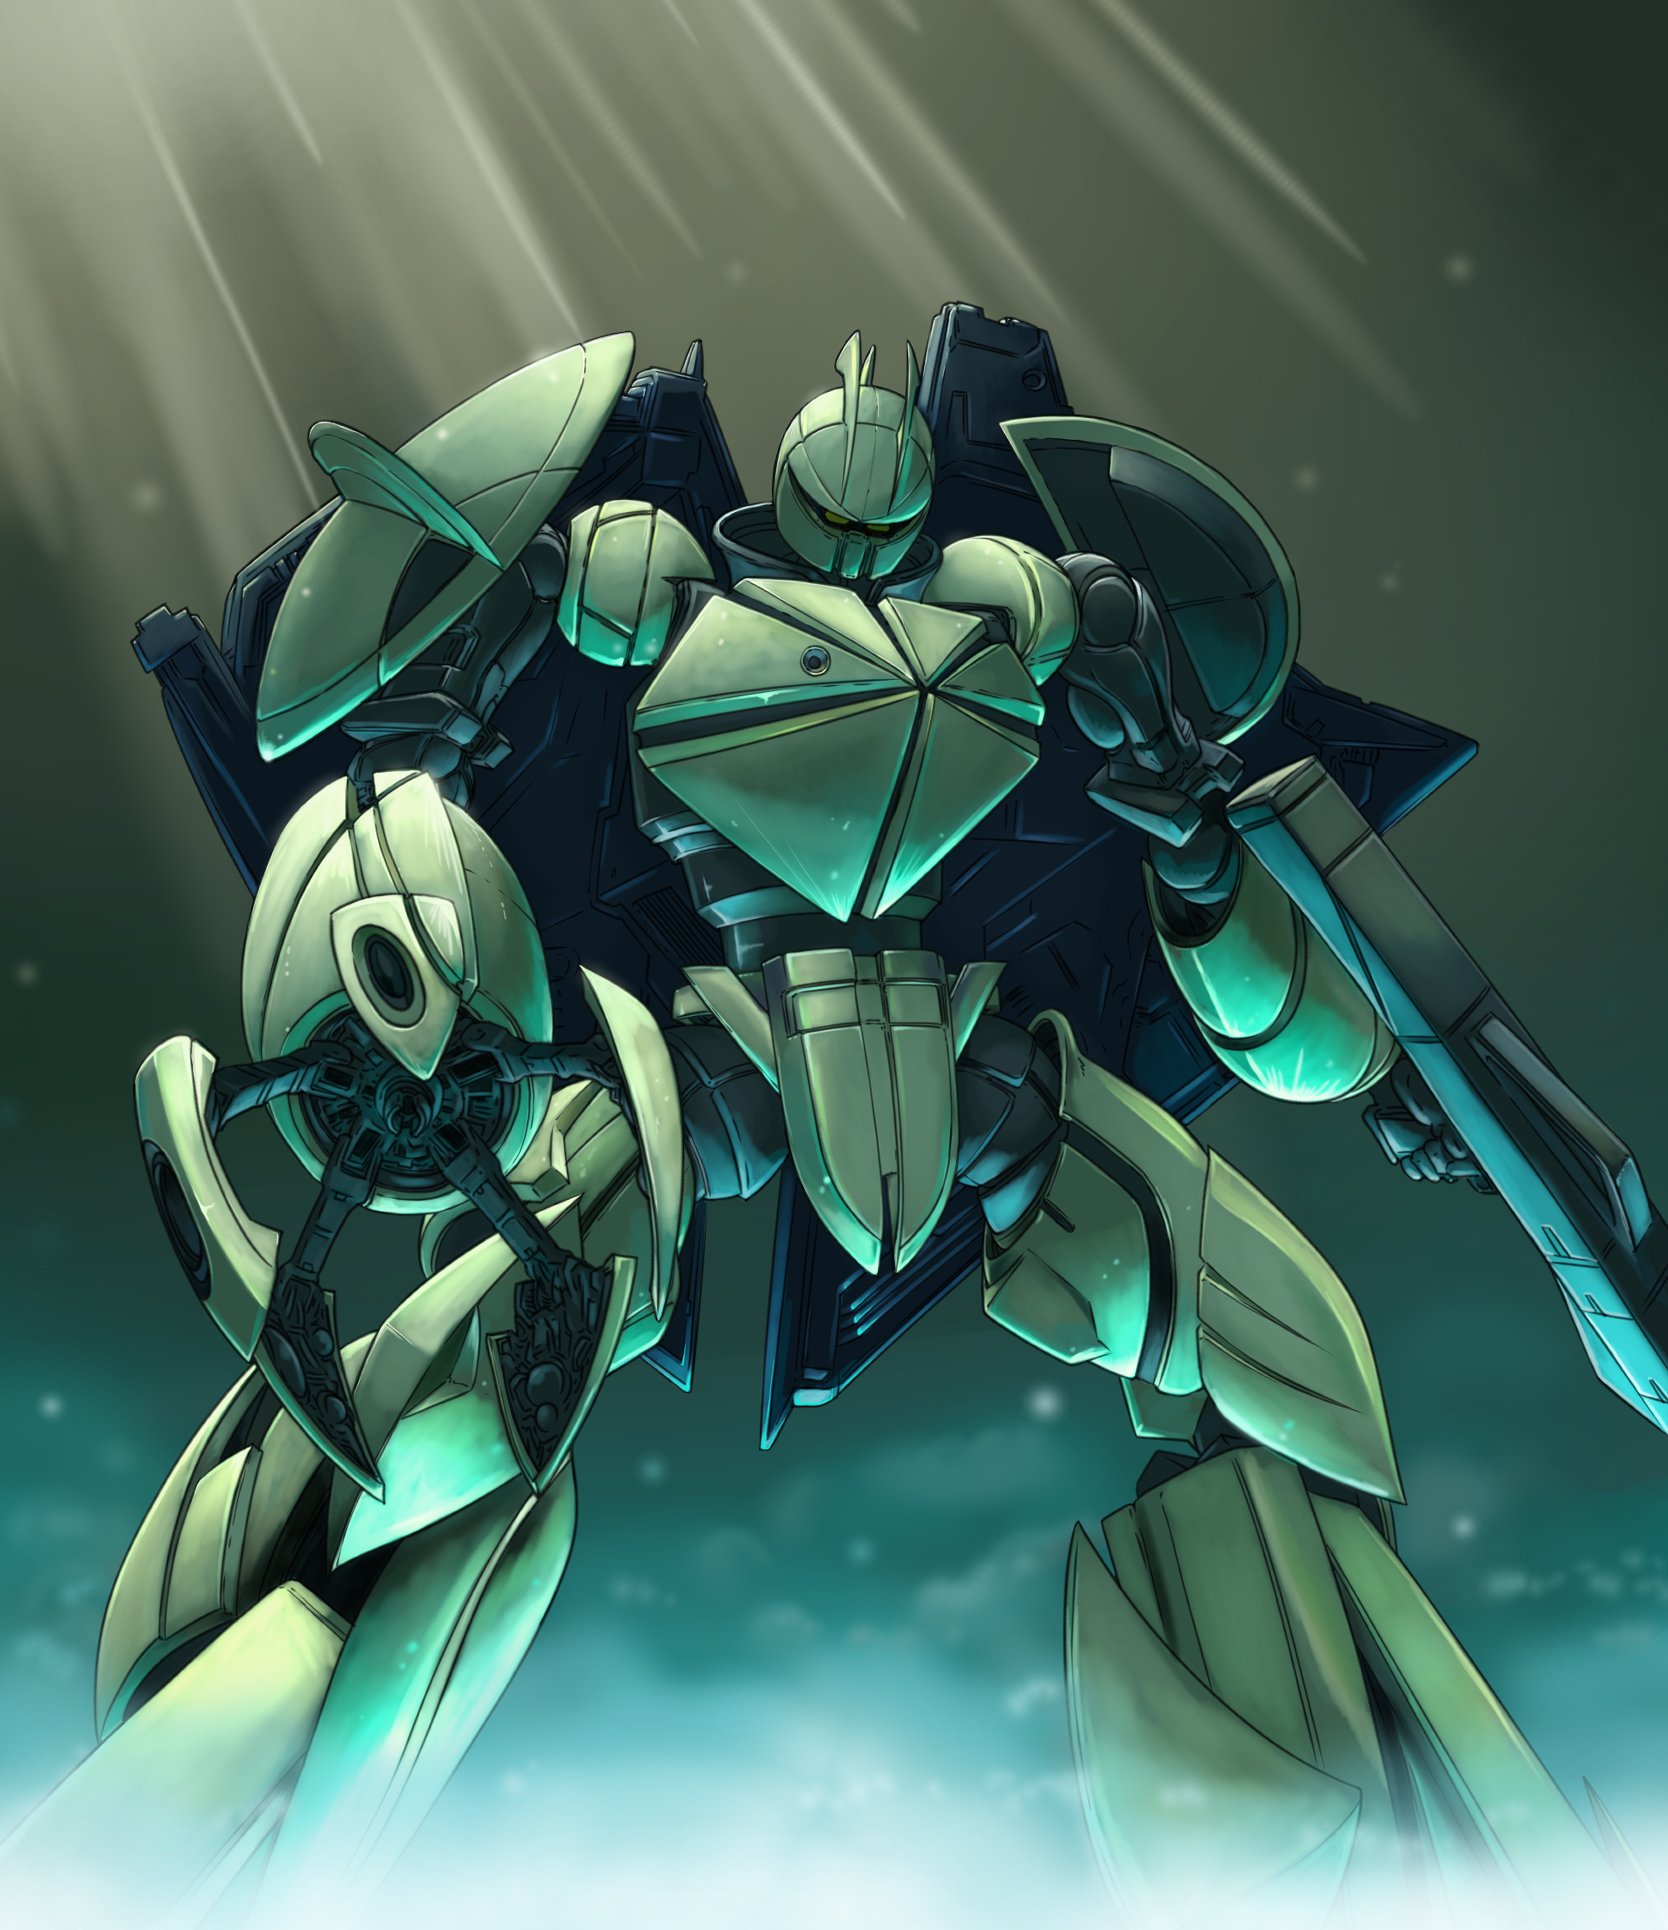 Anime 1668x1930 Turn X ∀ Gundam anime mechs Mobile Suit Super Robot Taisen artwork digital art fan art